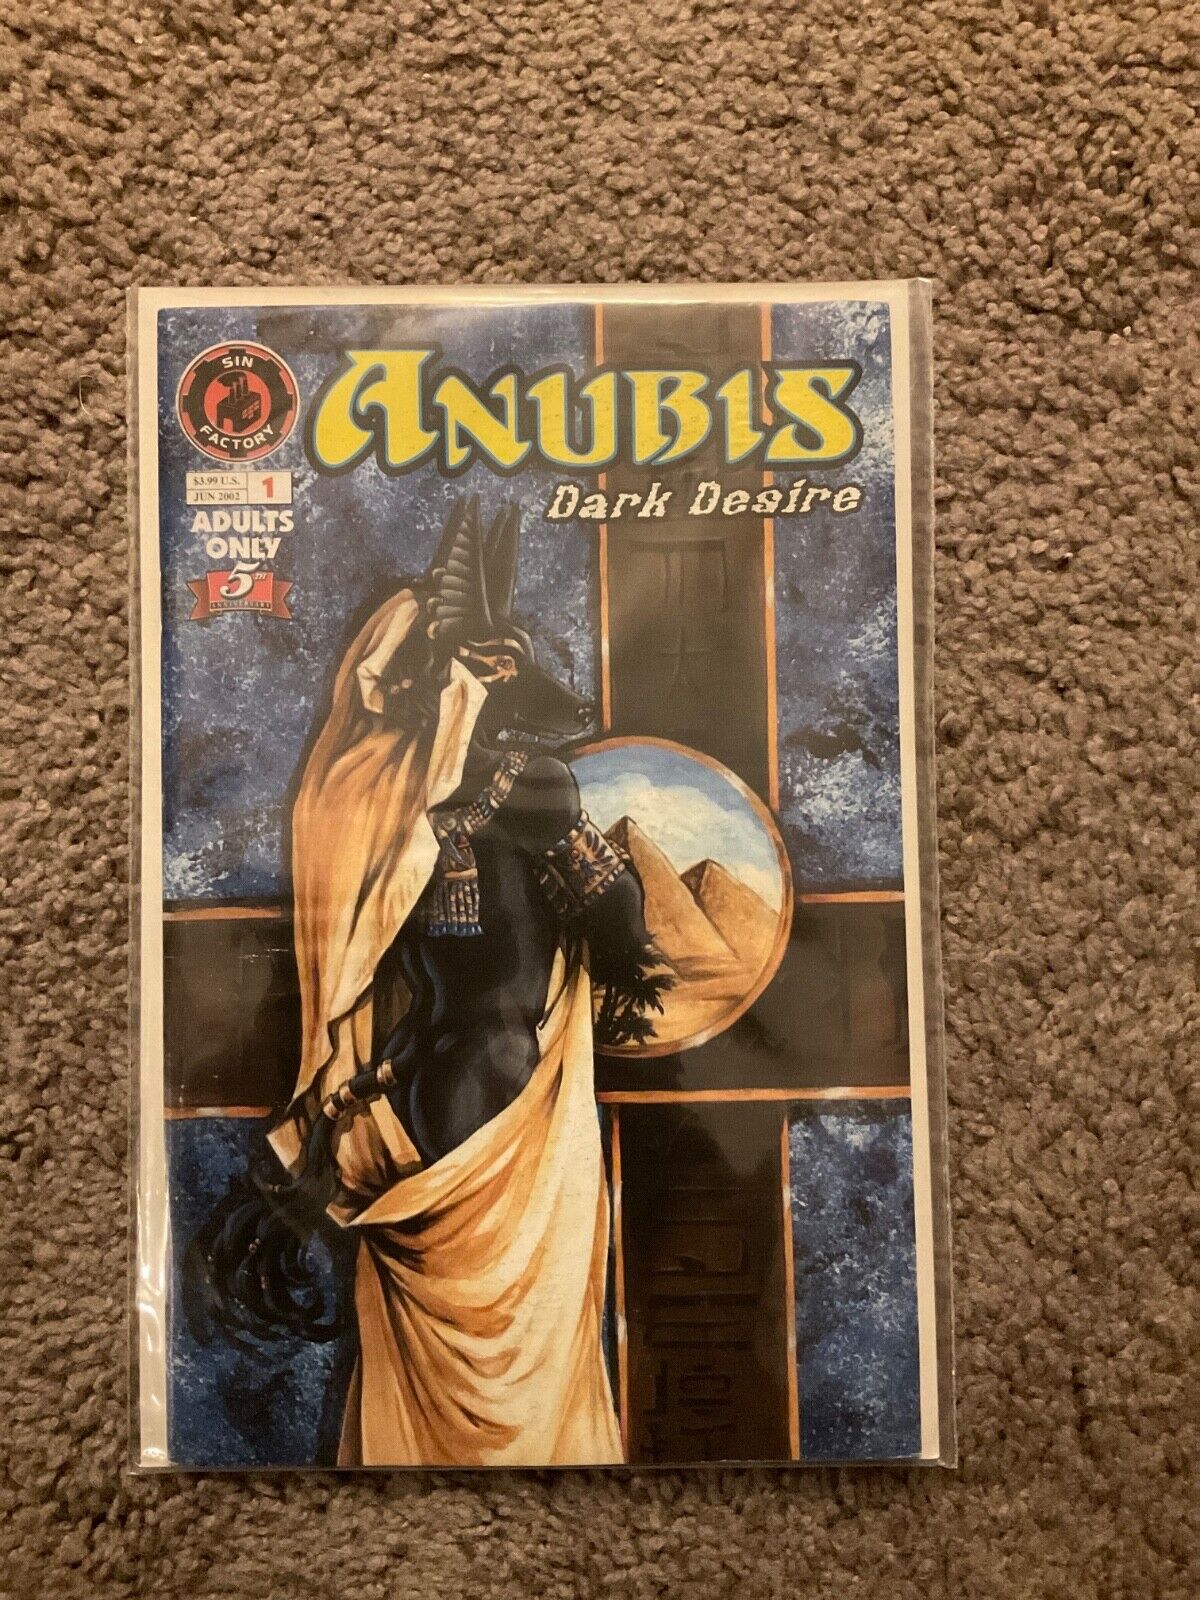 Anubis: Dark Desire, complete set. All issues 1 - 4 + hardcover.